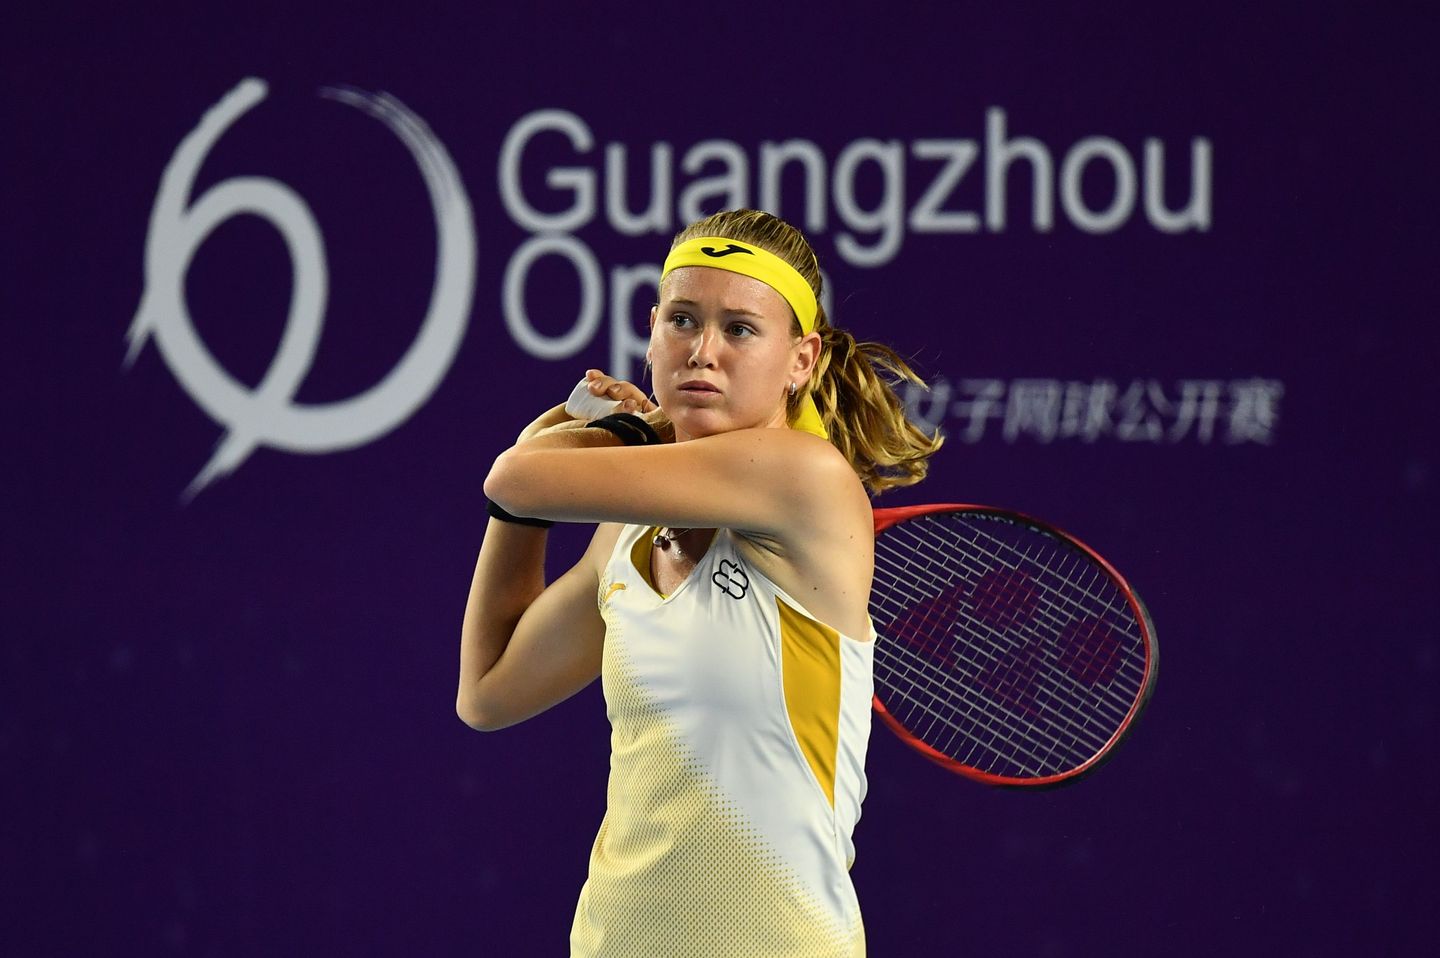 Bouzkova makes Guangzhou quarterfinals after Svitolina retirement